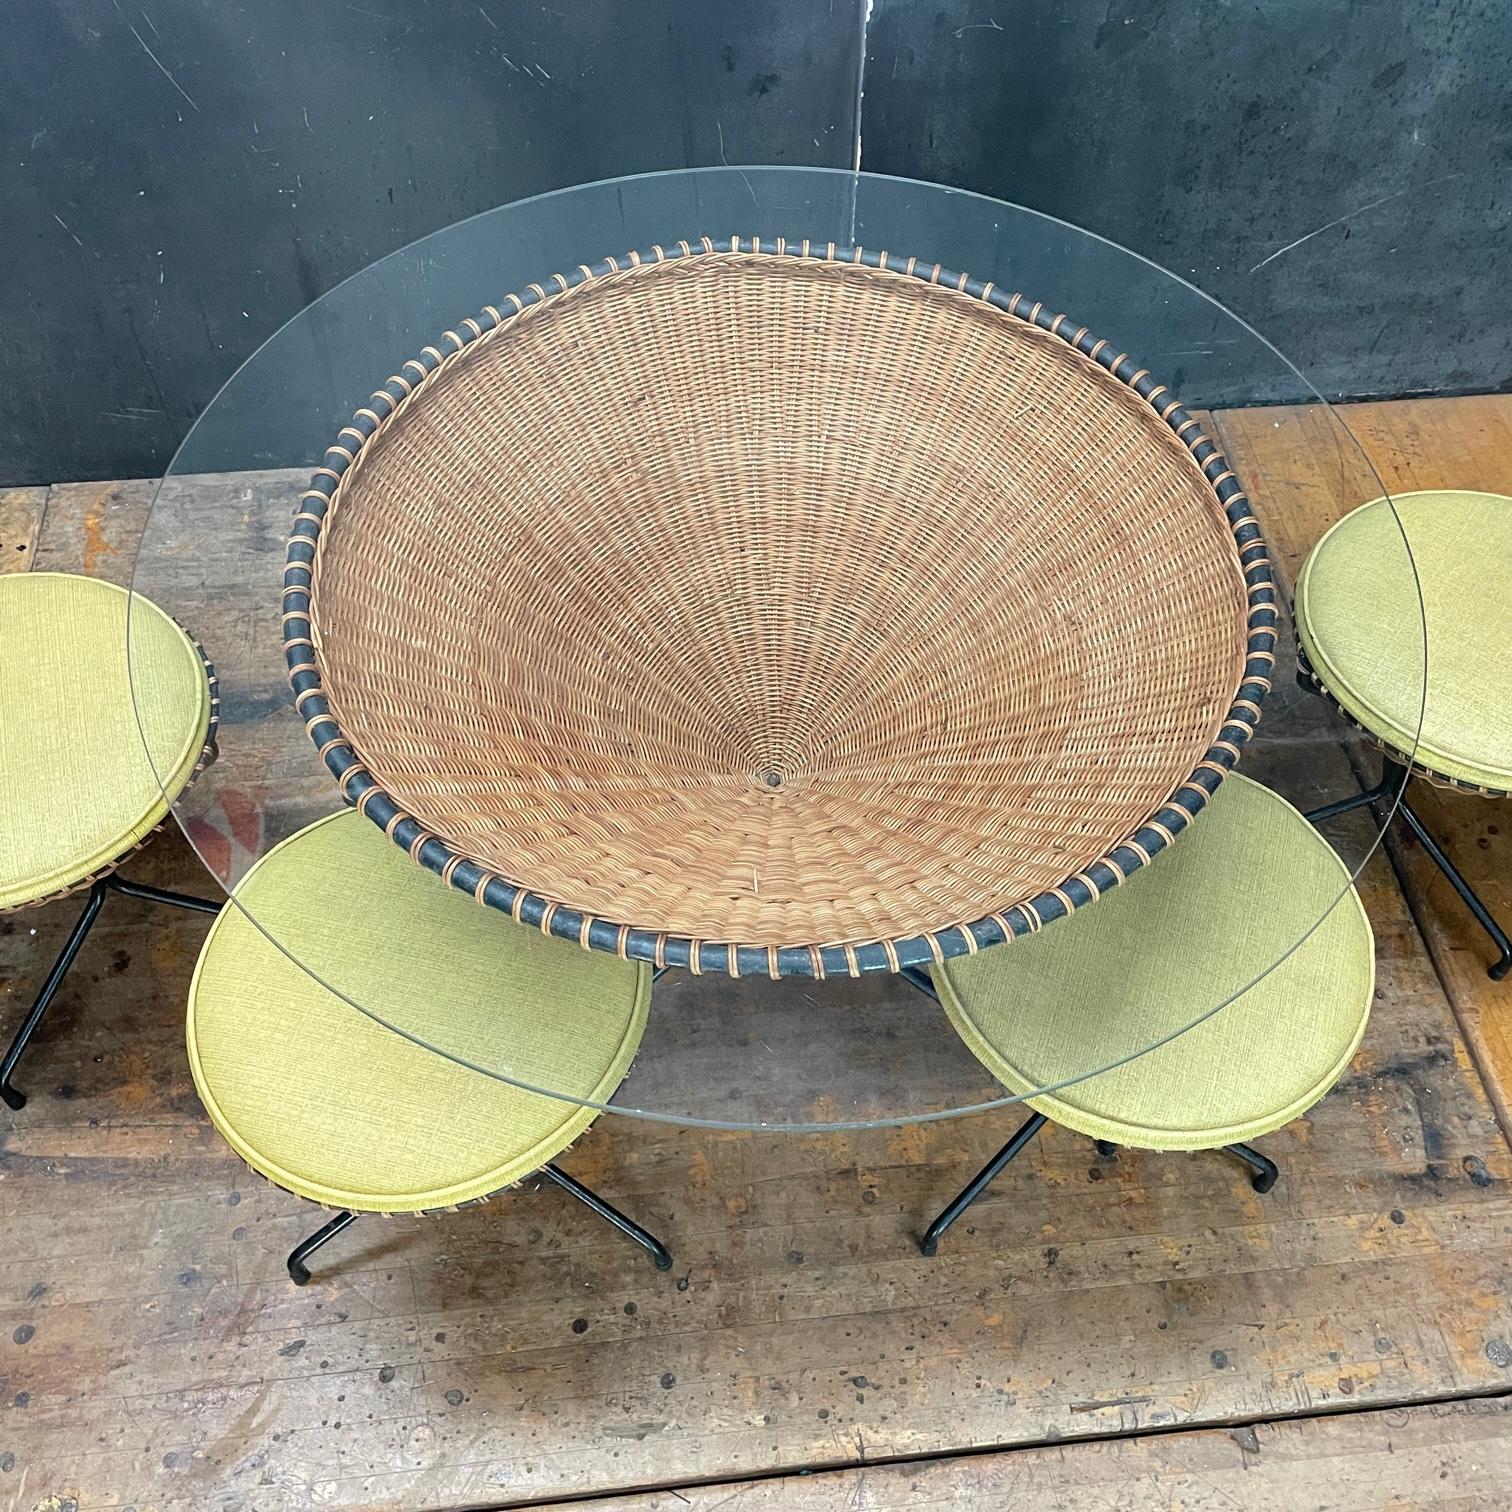 Naugahyde 1950s California Design Danny Ho Fong Wicker Iron Tiki Dining Table Stool Set For Sale